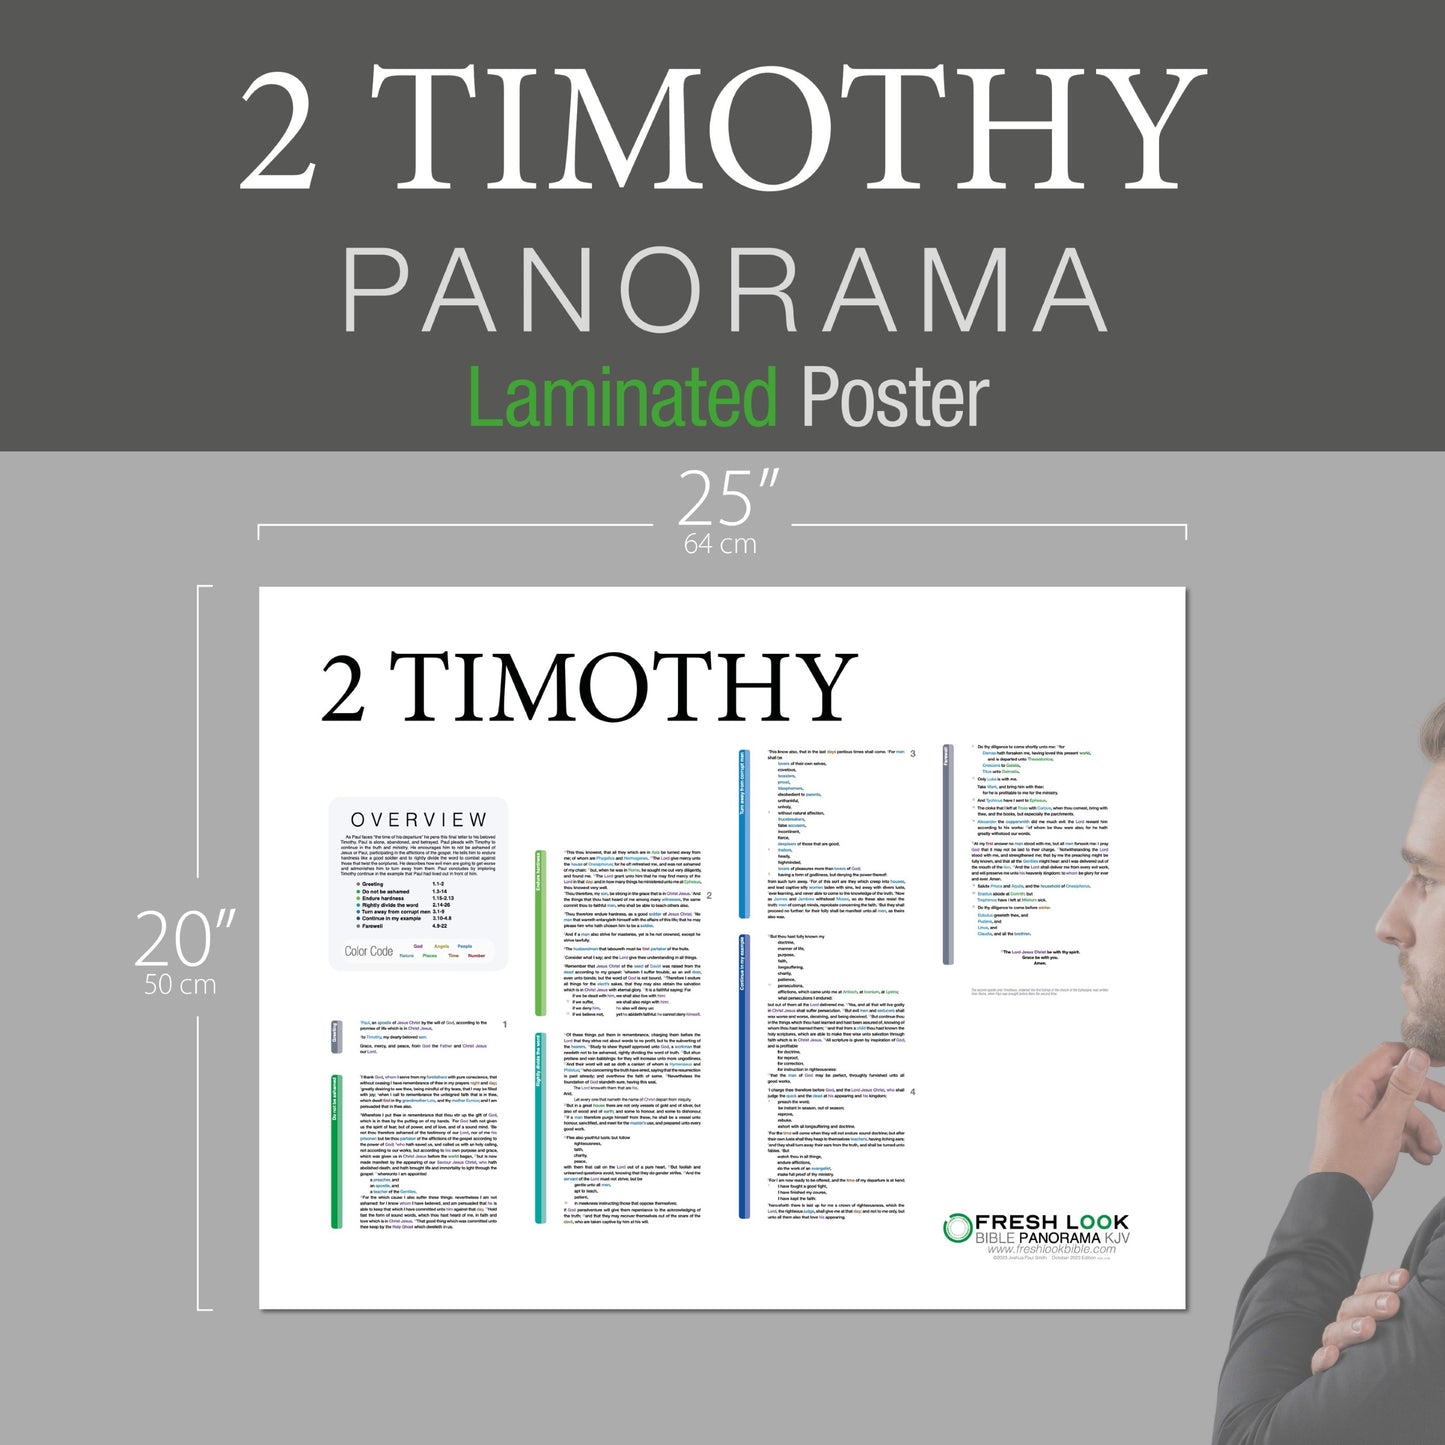 2 Timothy Panorama Laminated